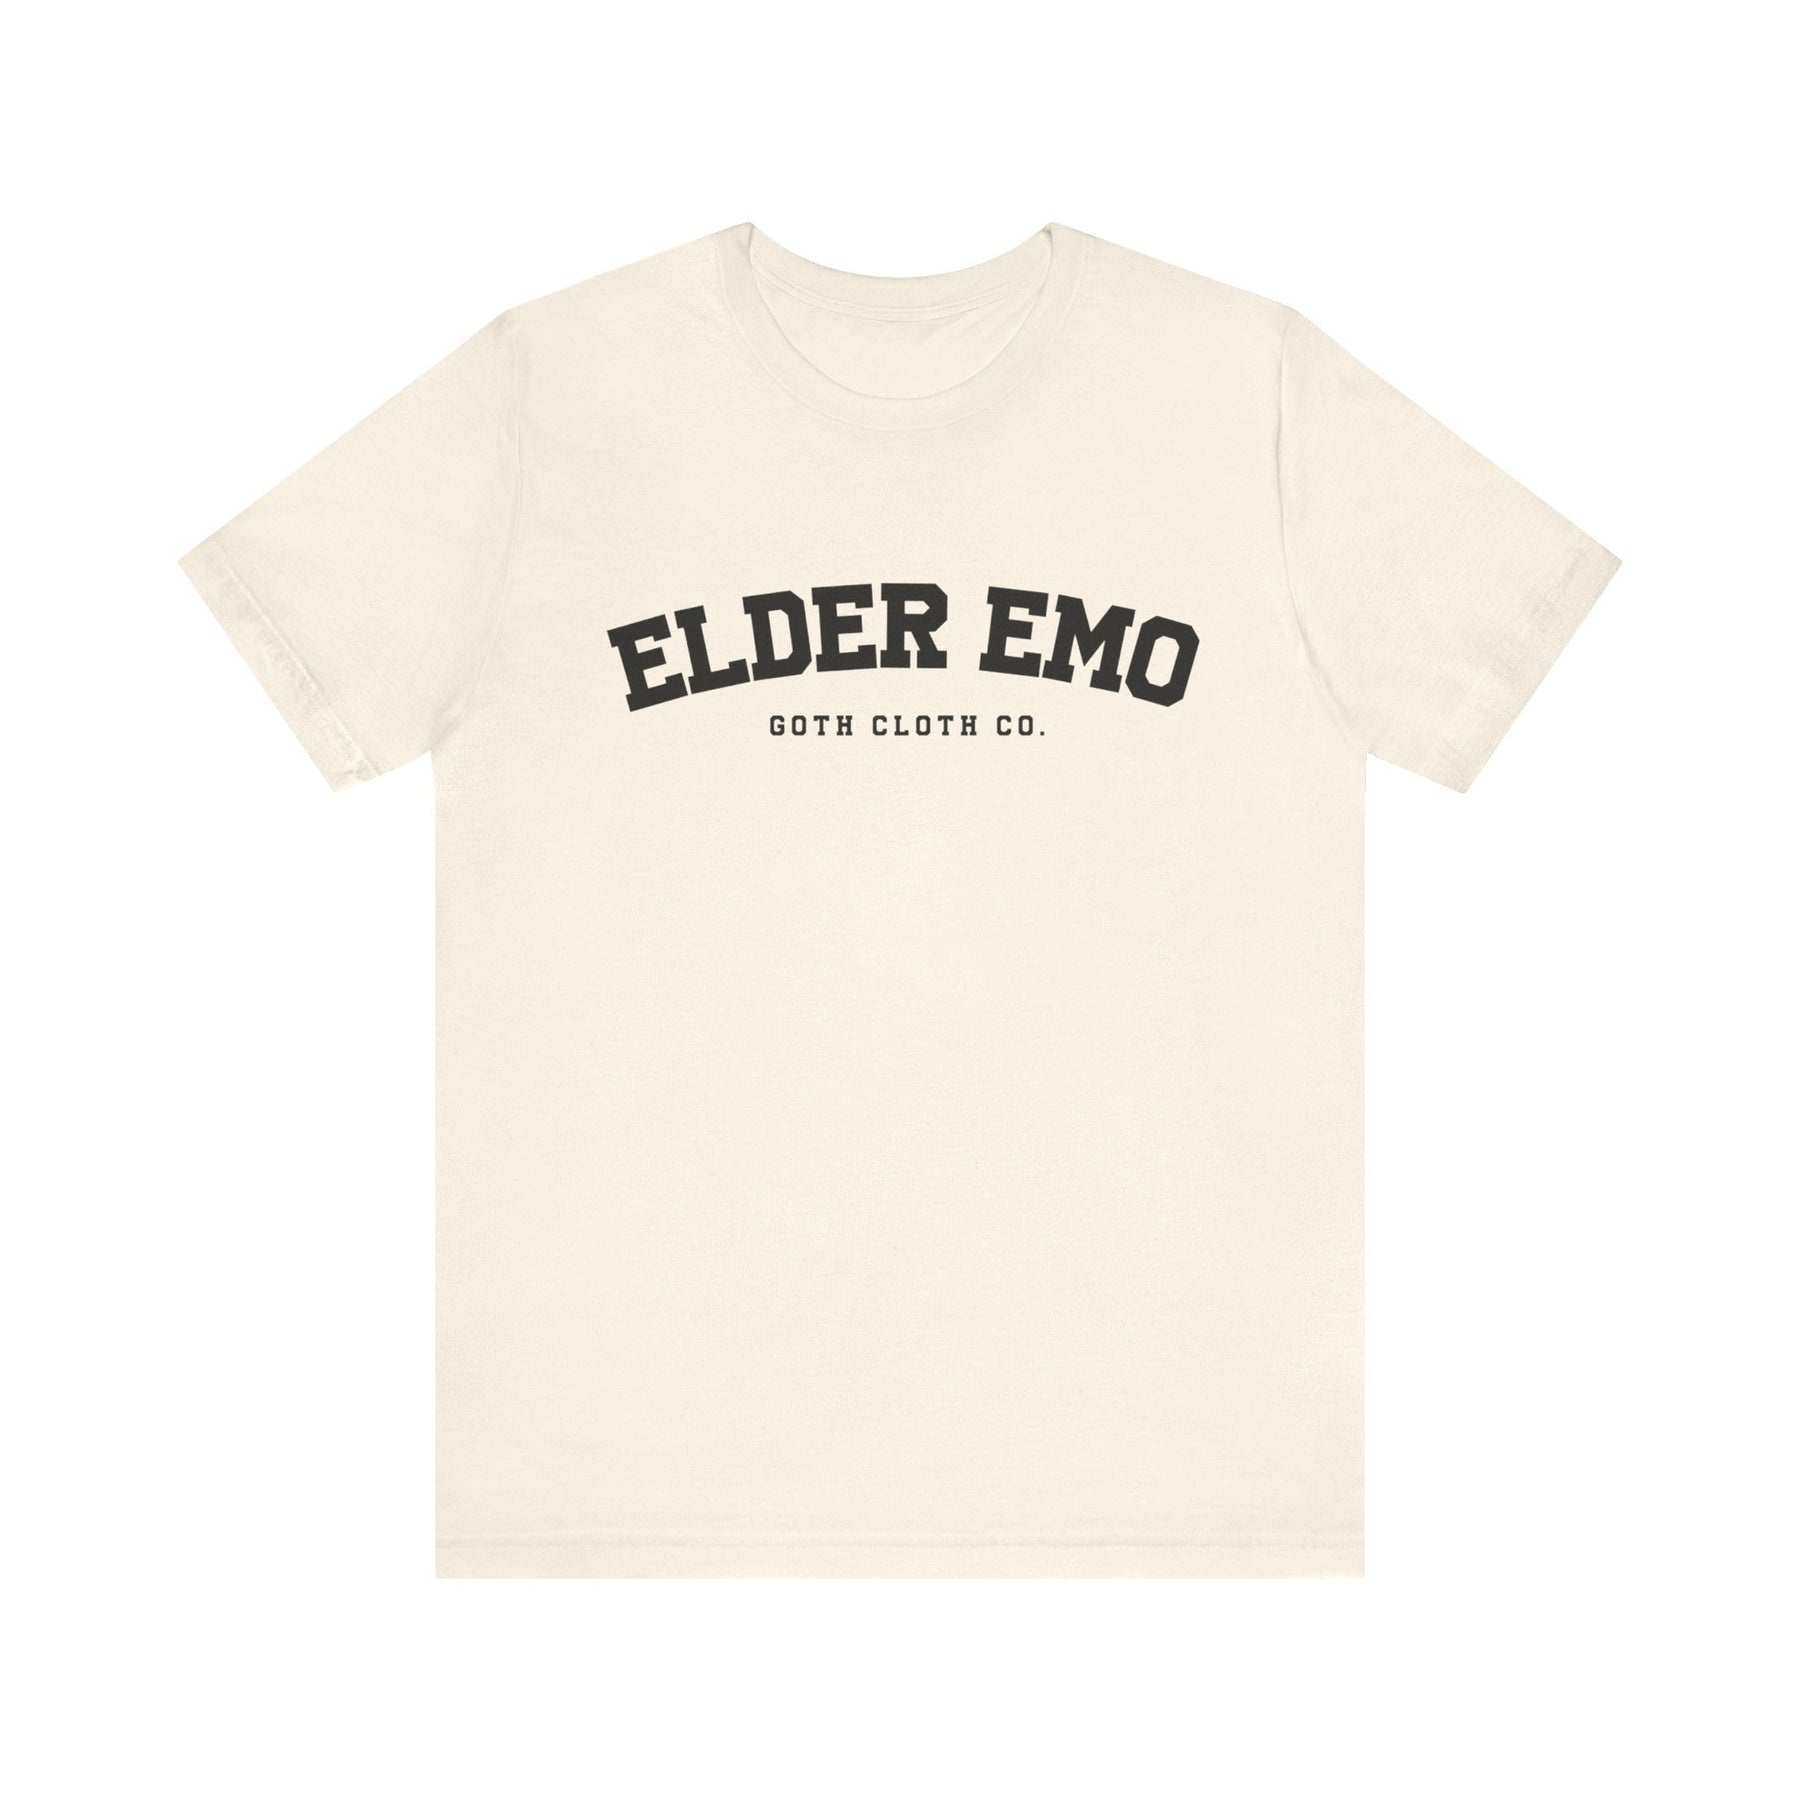 Elder Emo Short Sleeve Tee - Goth Cloth Co.T - Shirt19376934487652798389